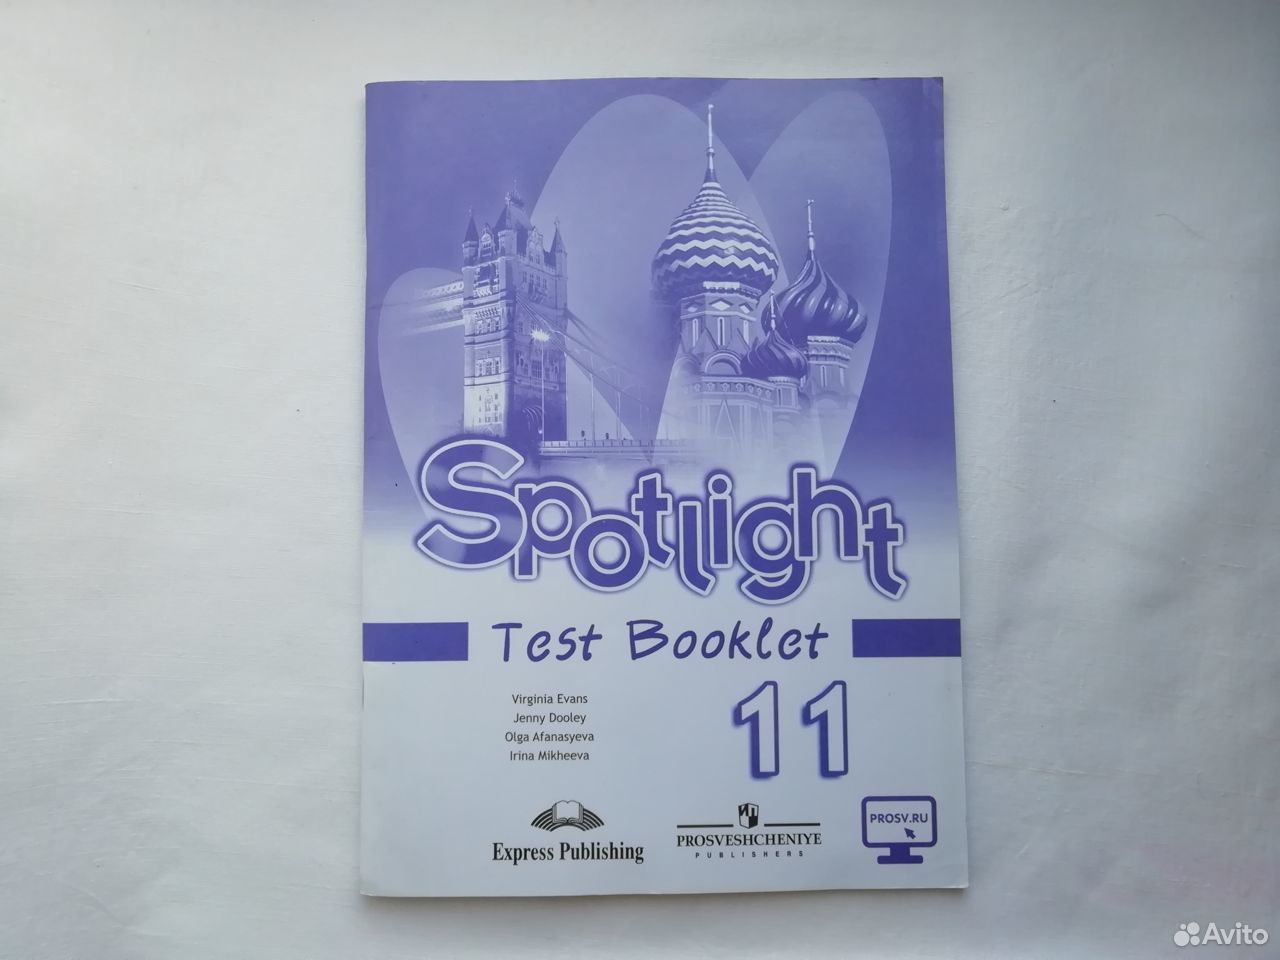 Спотлайт 5 test booklet. Test booklet 11 класс Spotlight. Тест буклет 11 класс Spotlight. Спотлайт 8 тест буклет. Тест буклет спотлайт 11 класс ответы.